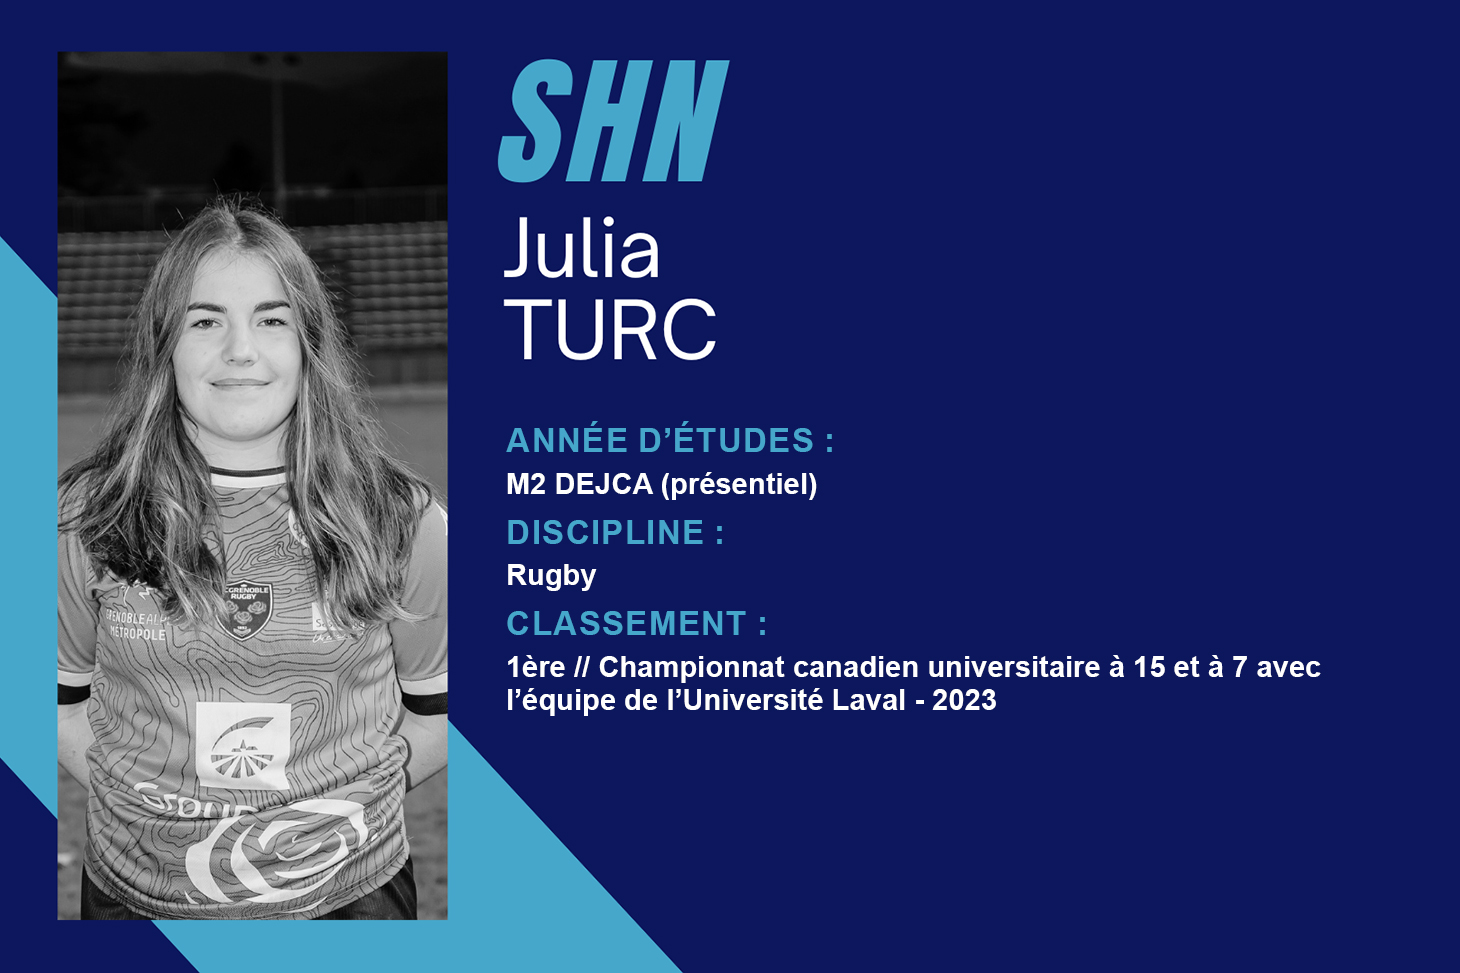 Julia TURC